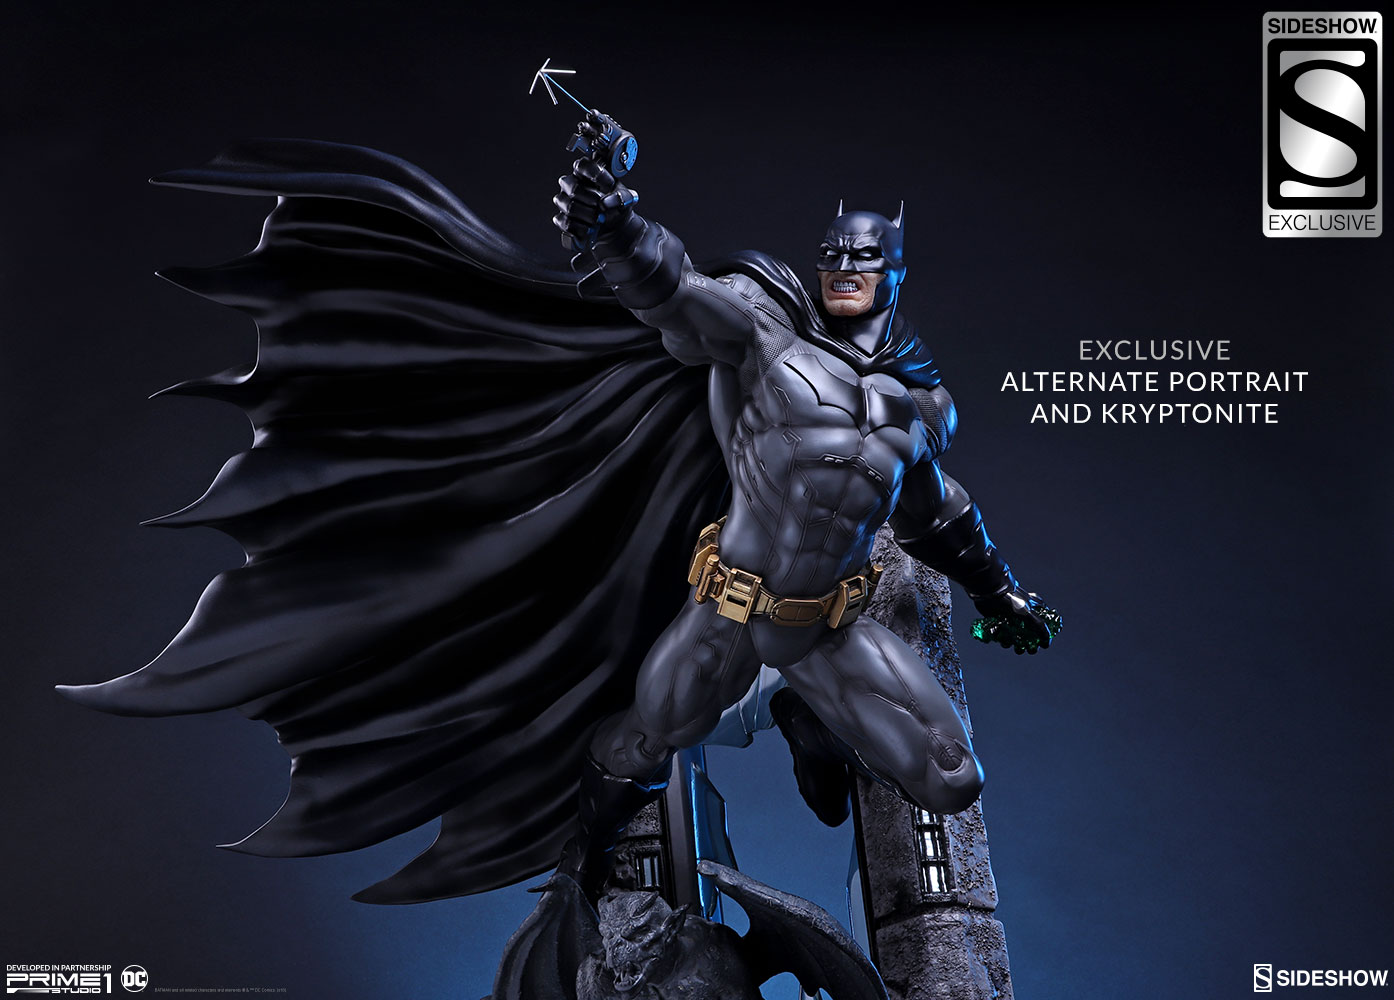 batman sideshow statue